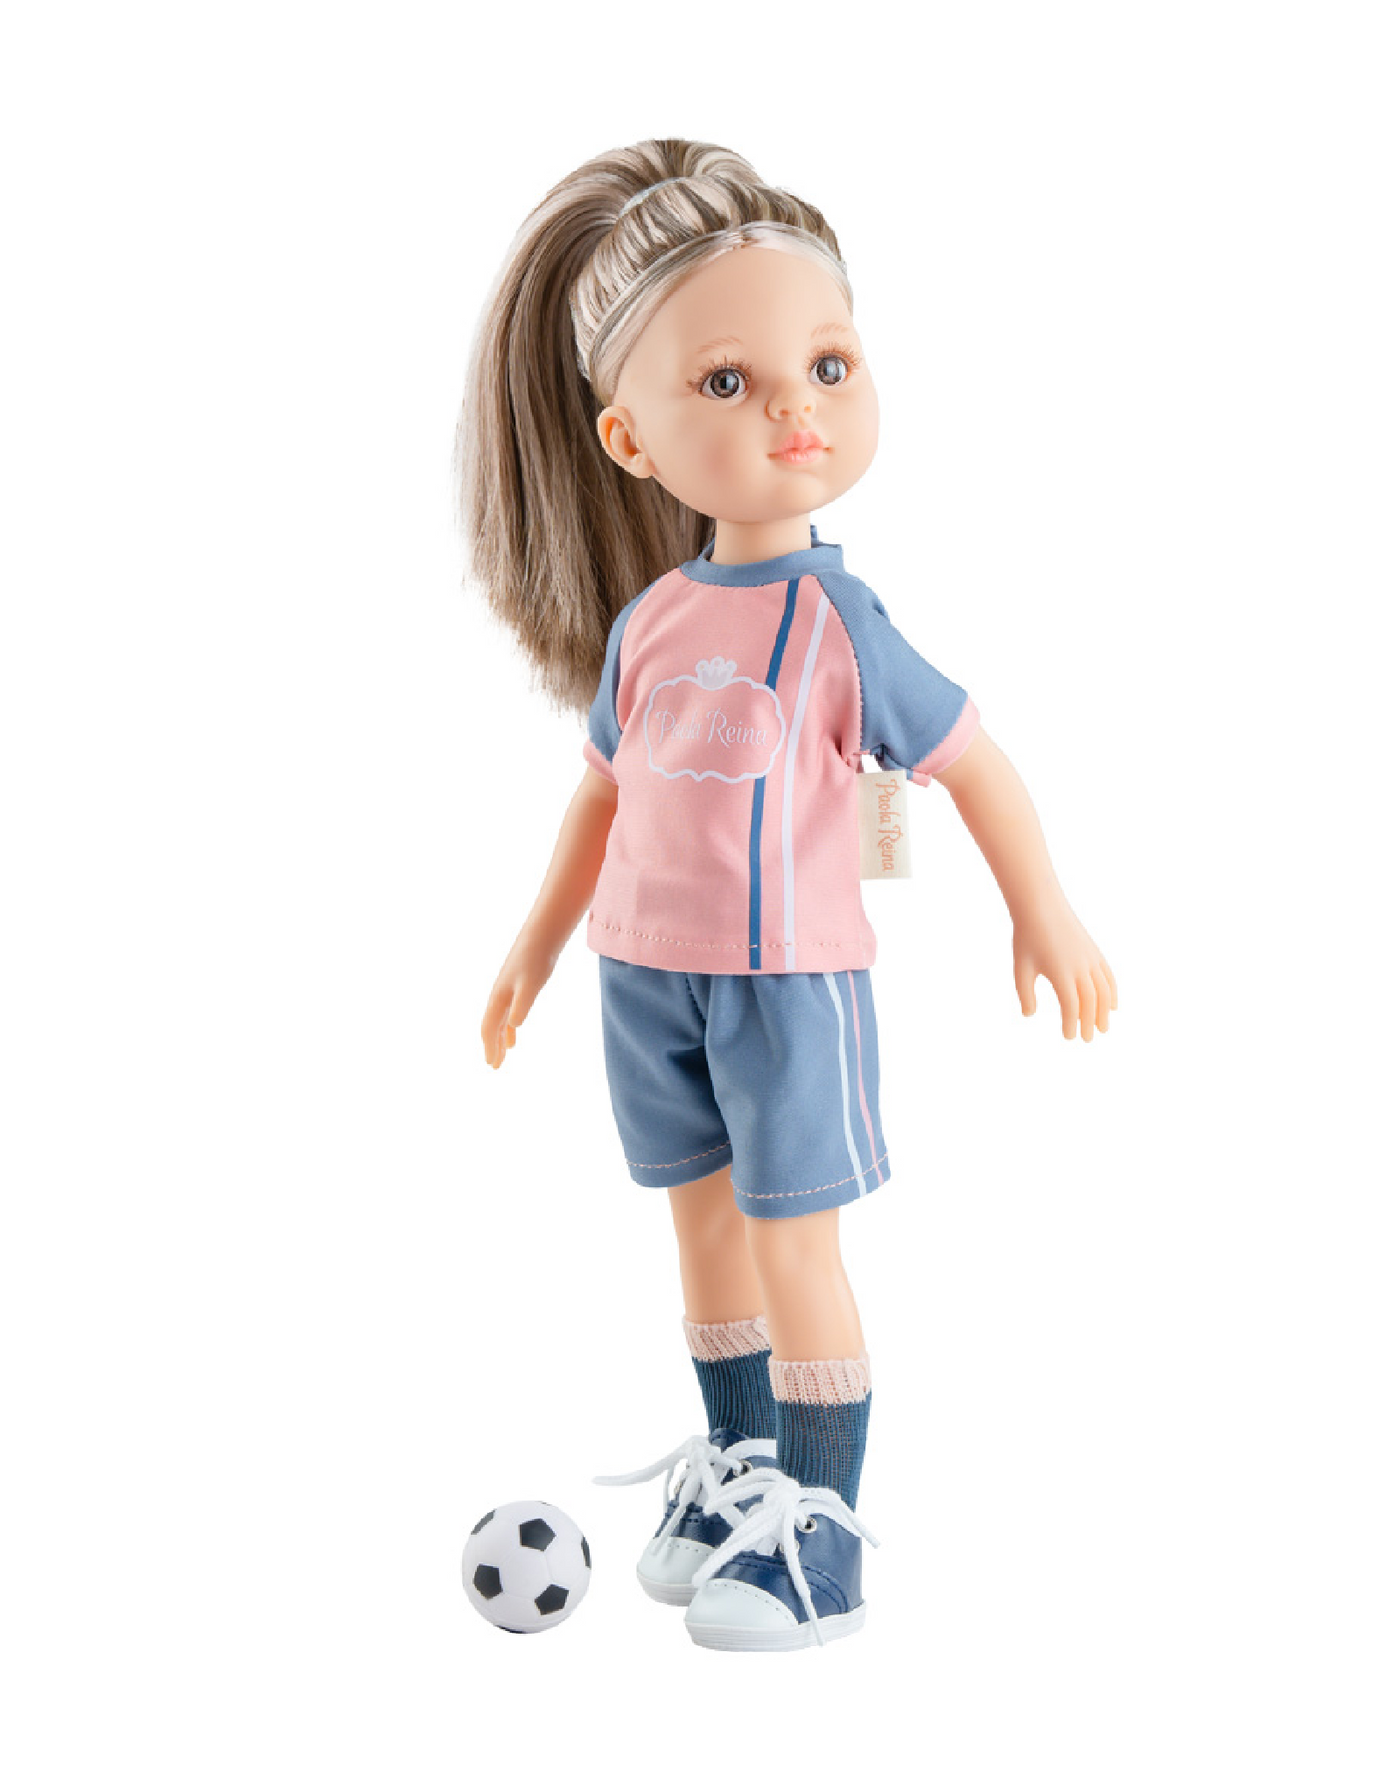 Las Amigas doll - Monica the soccer player - Paola Reina